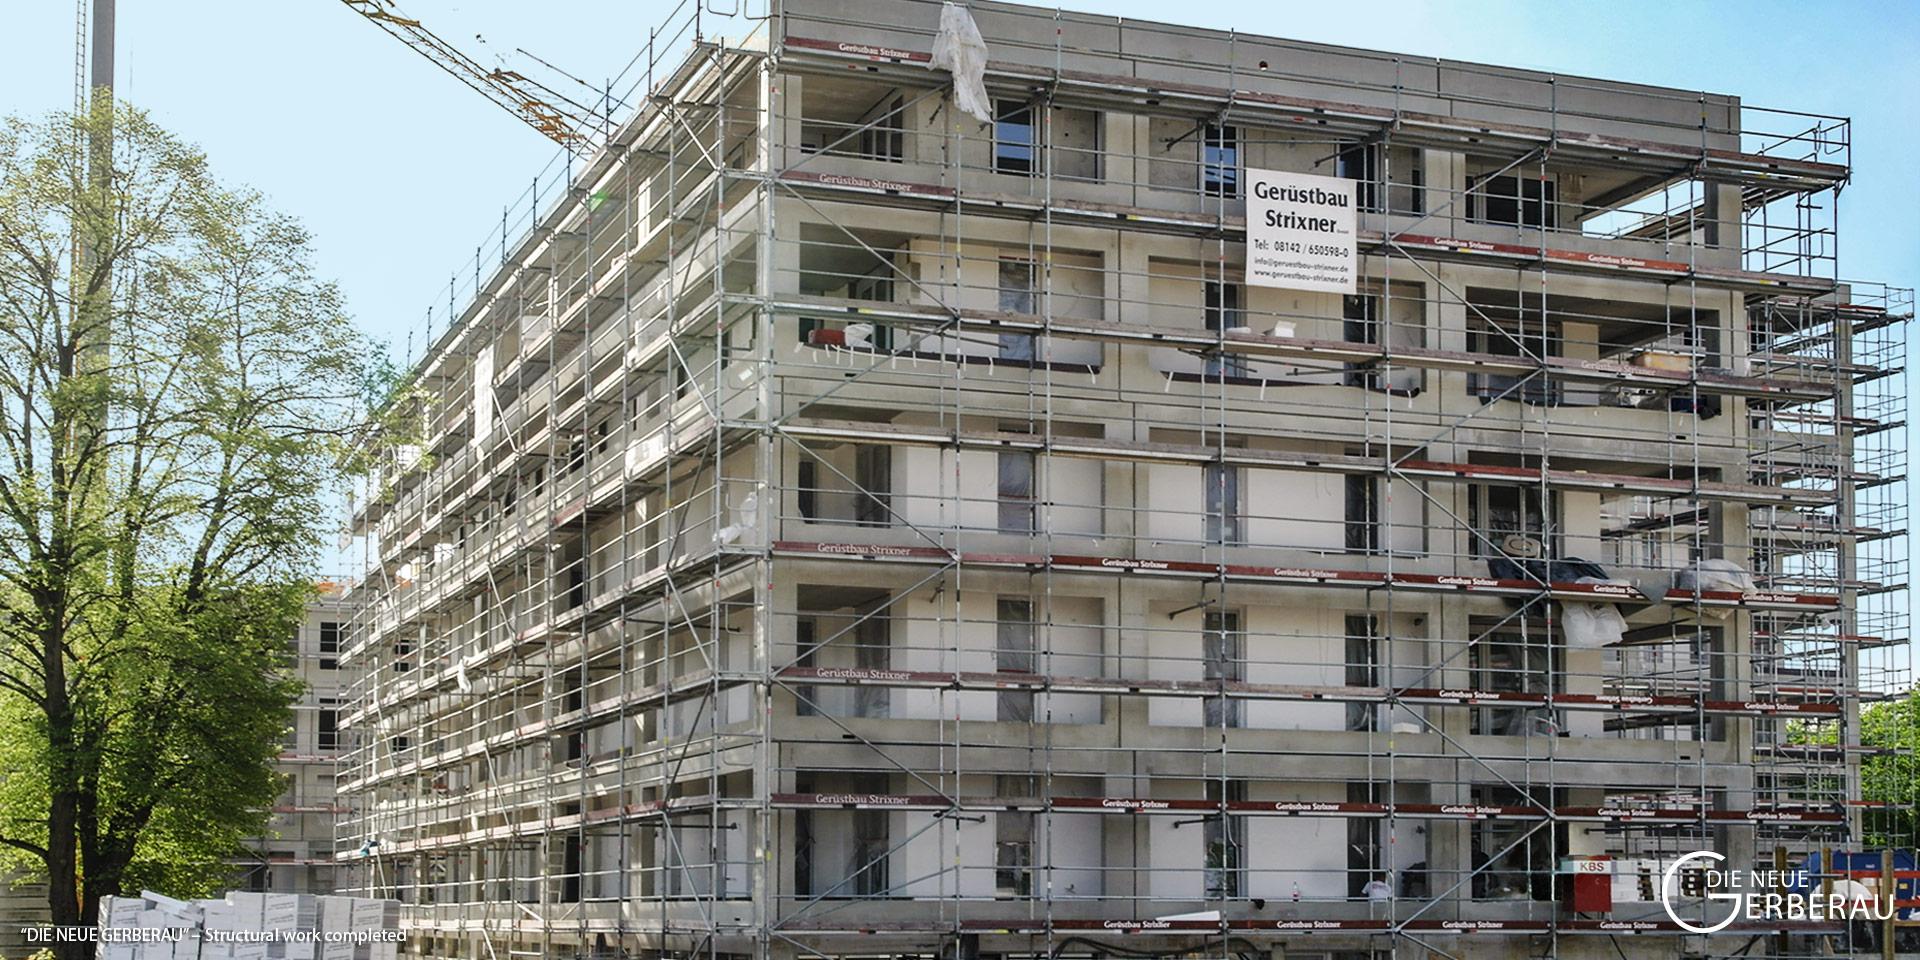 “DIE NEUE GERBERAU“ in Munich-Allach: Structural work completed